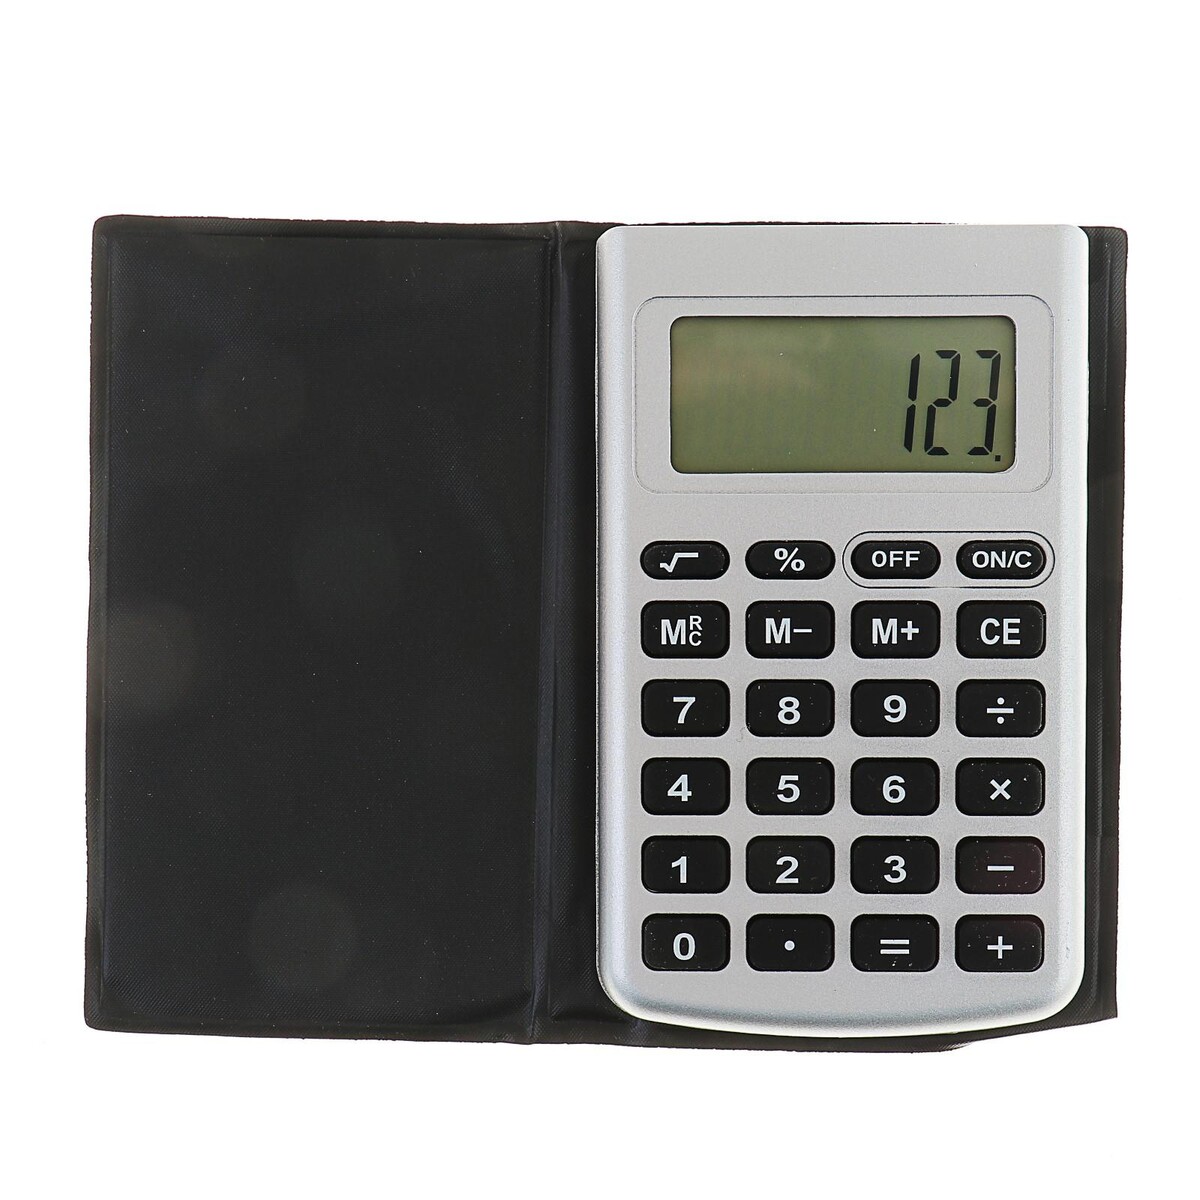 Калькулятор карманный, 8-разрядный, 2239 калькулятор карманный с чехлом 8 разрядный kc 888 работает от батарейки таблетка ag 10